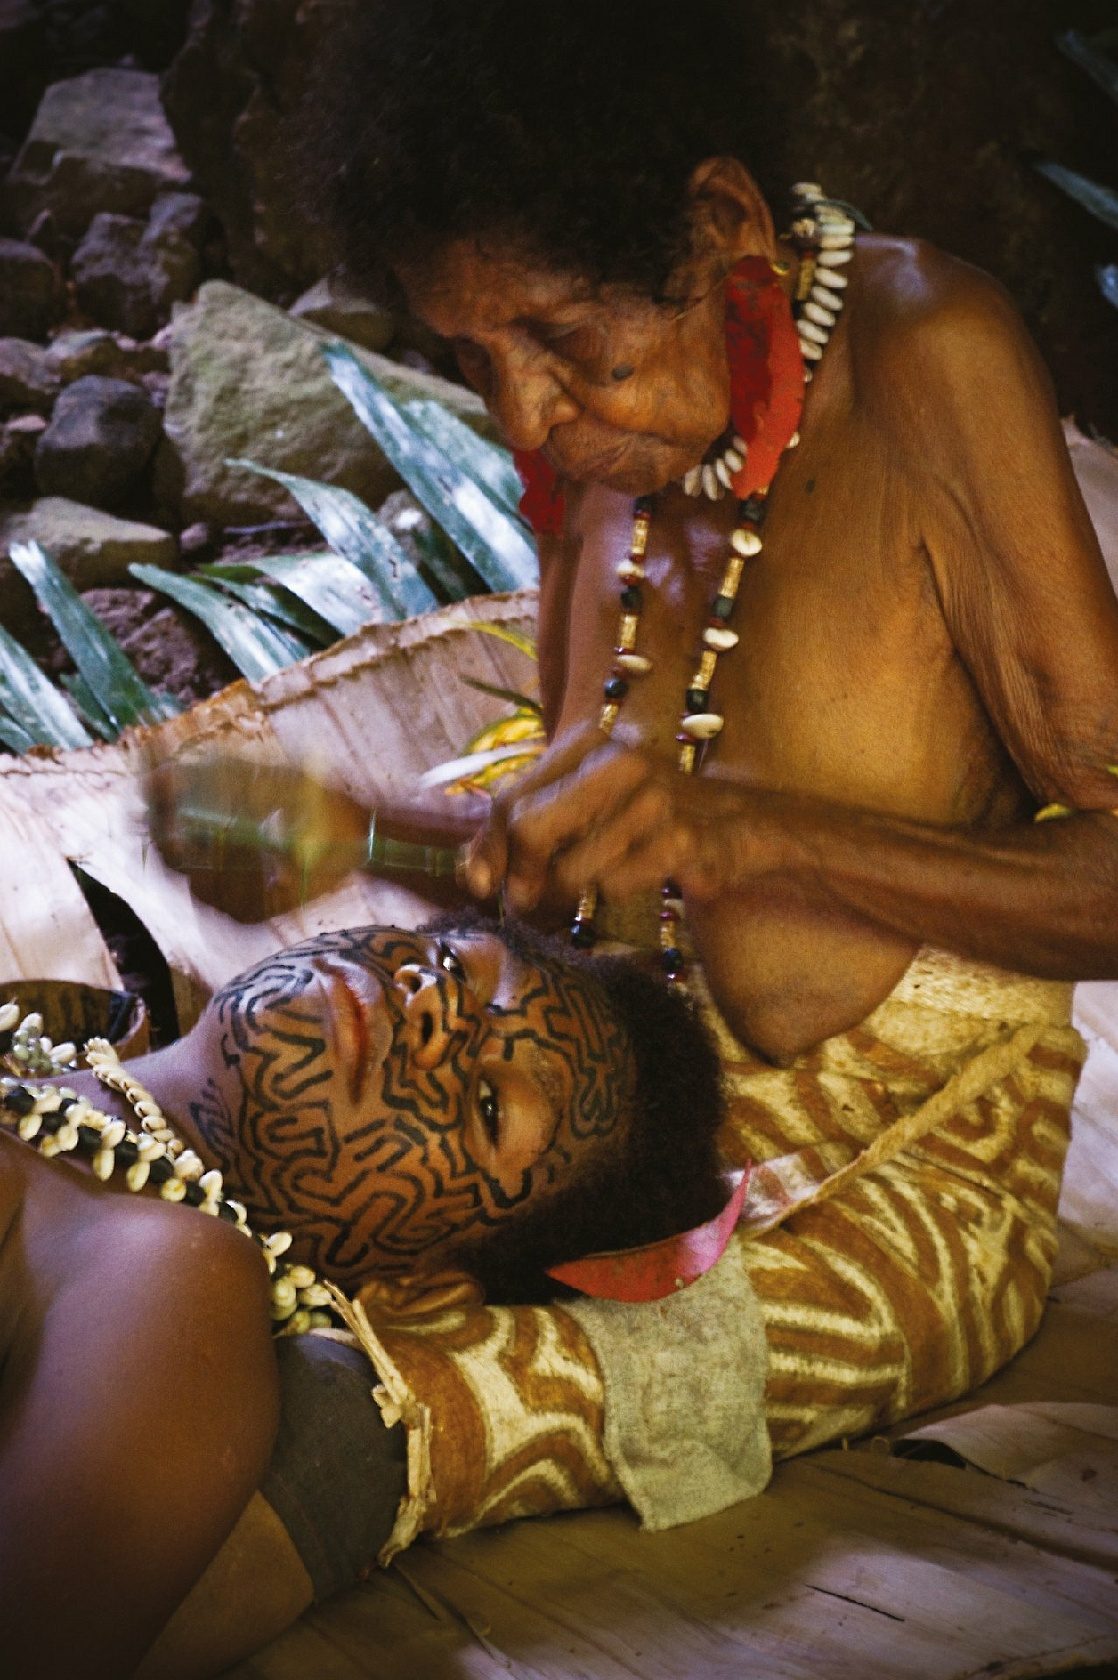 Viaja Trip Expedition to a Papua Nueva New Guinea Tufi Tatuaje Tattoo tribu tribe Last Places Travels